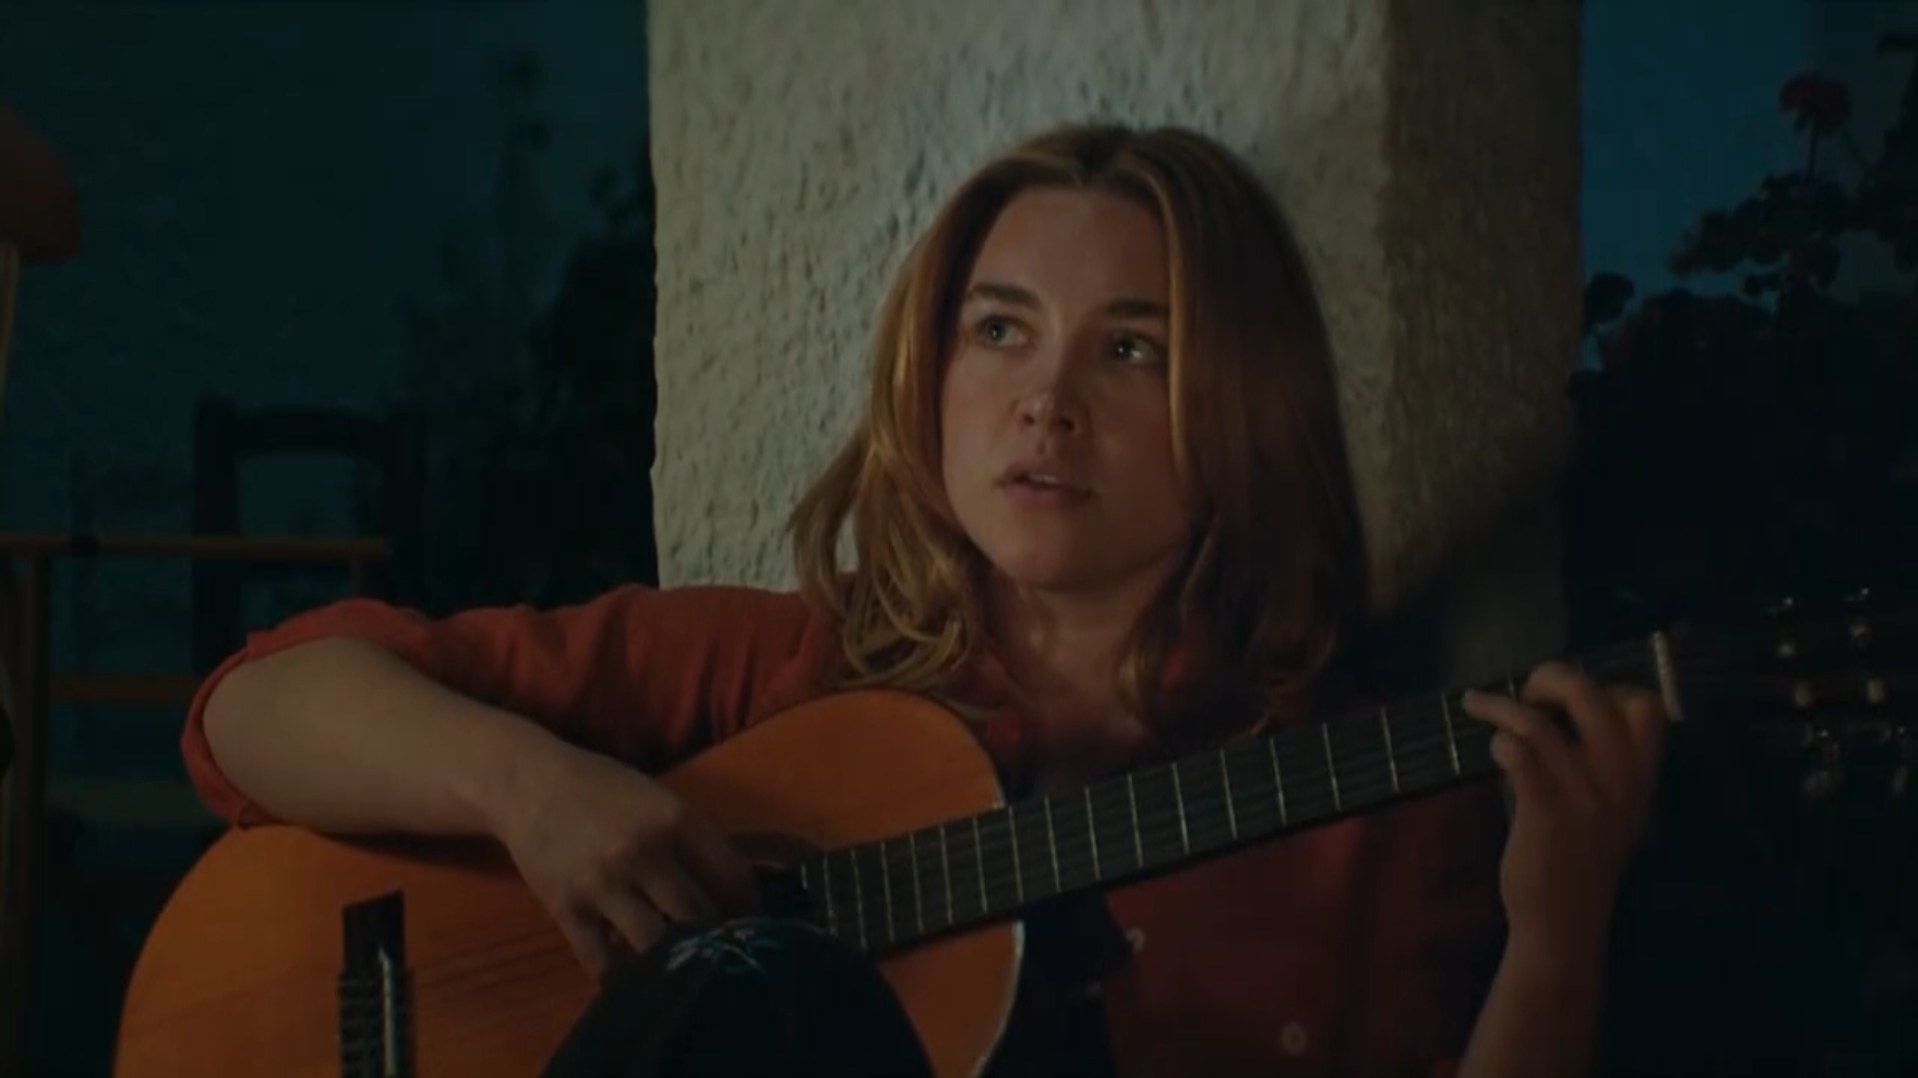 A woman plays a guitar